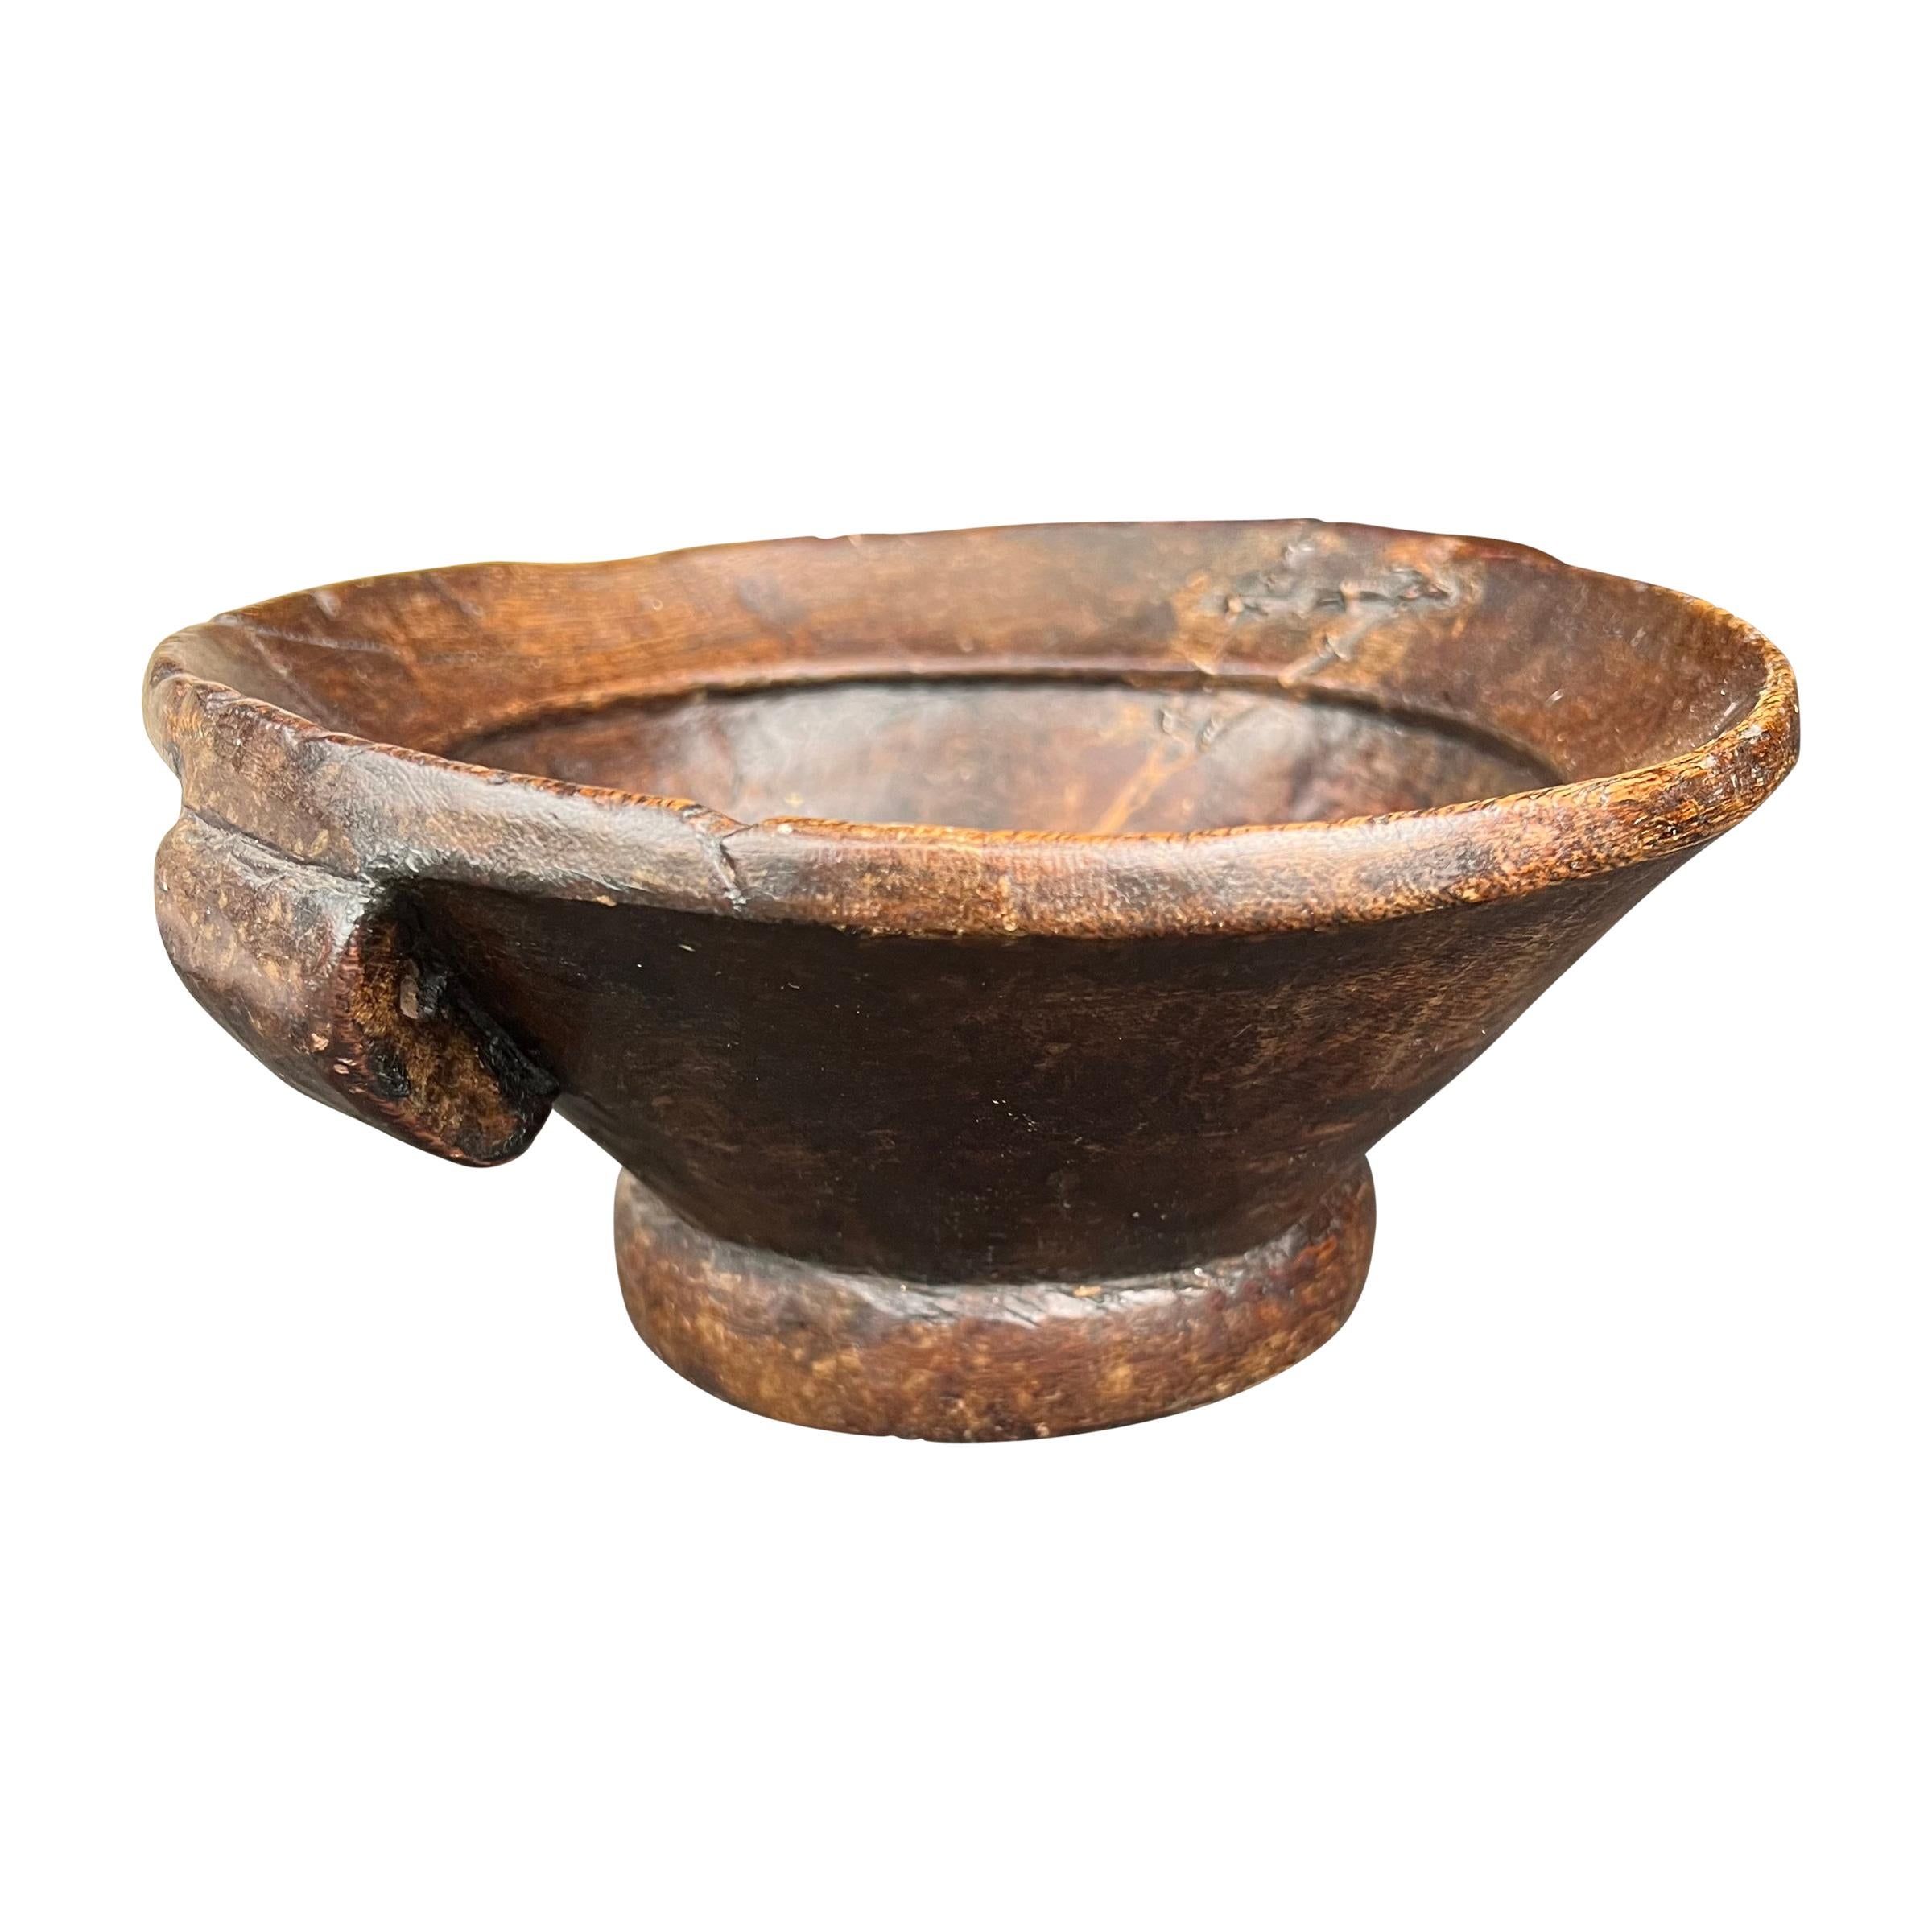 Primitive 19th Century Wooden Bowl